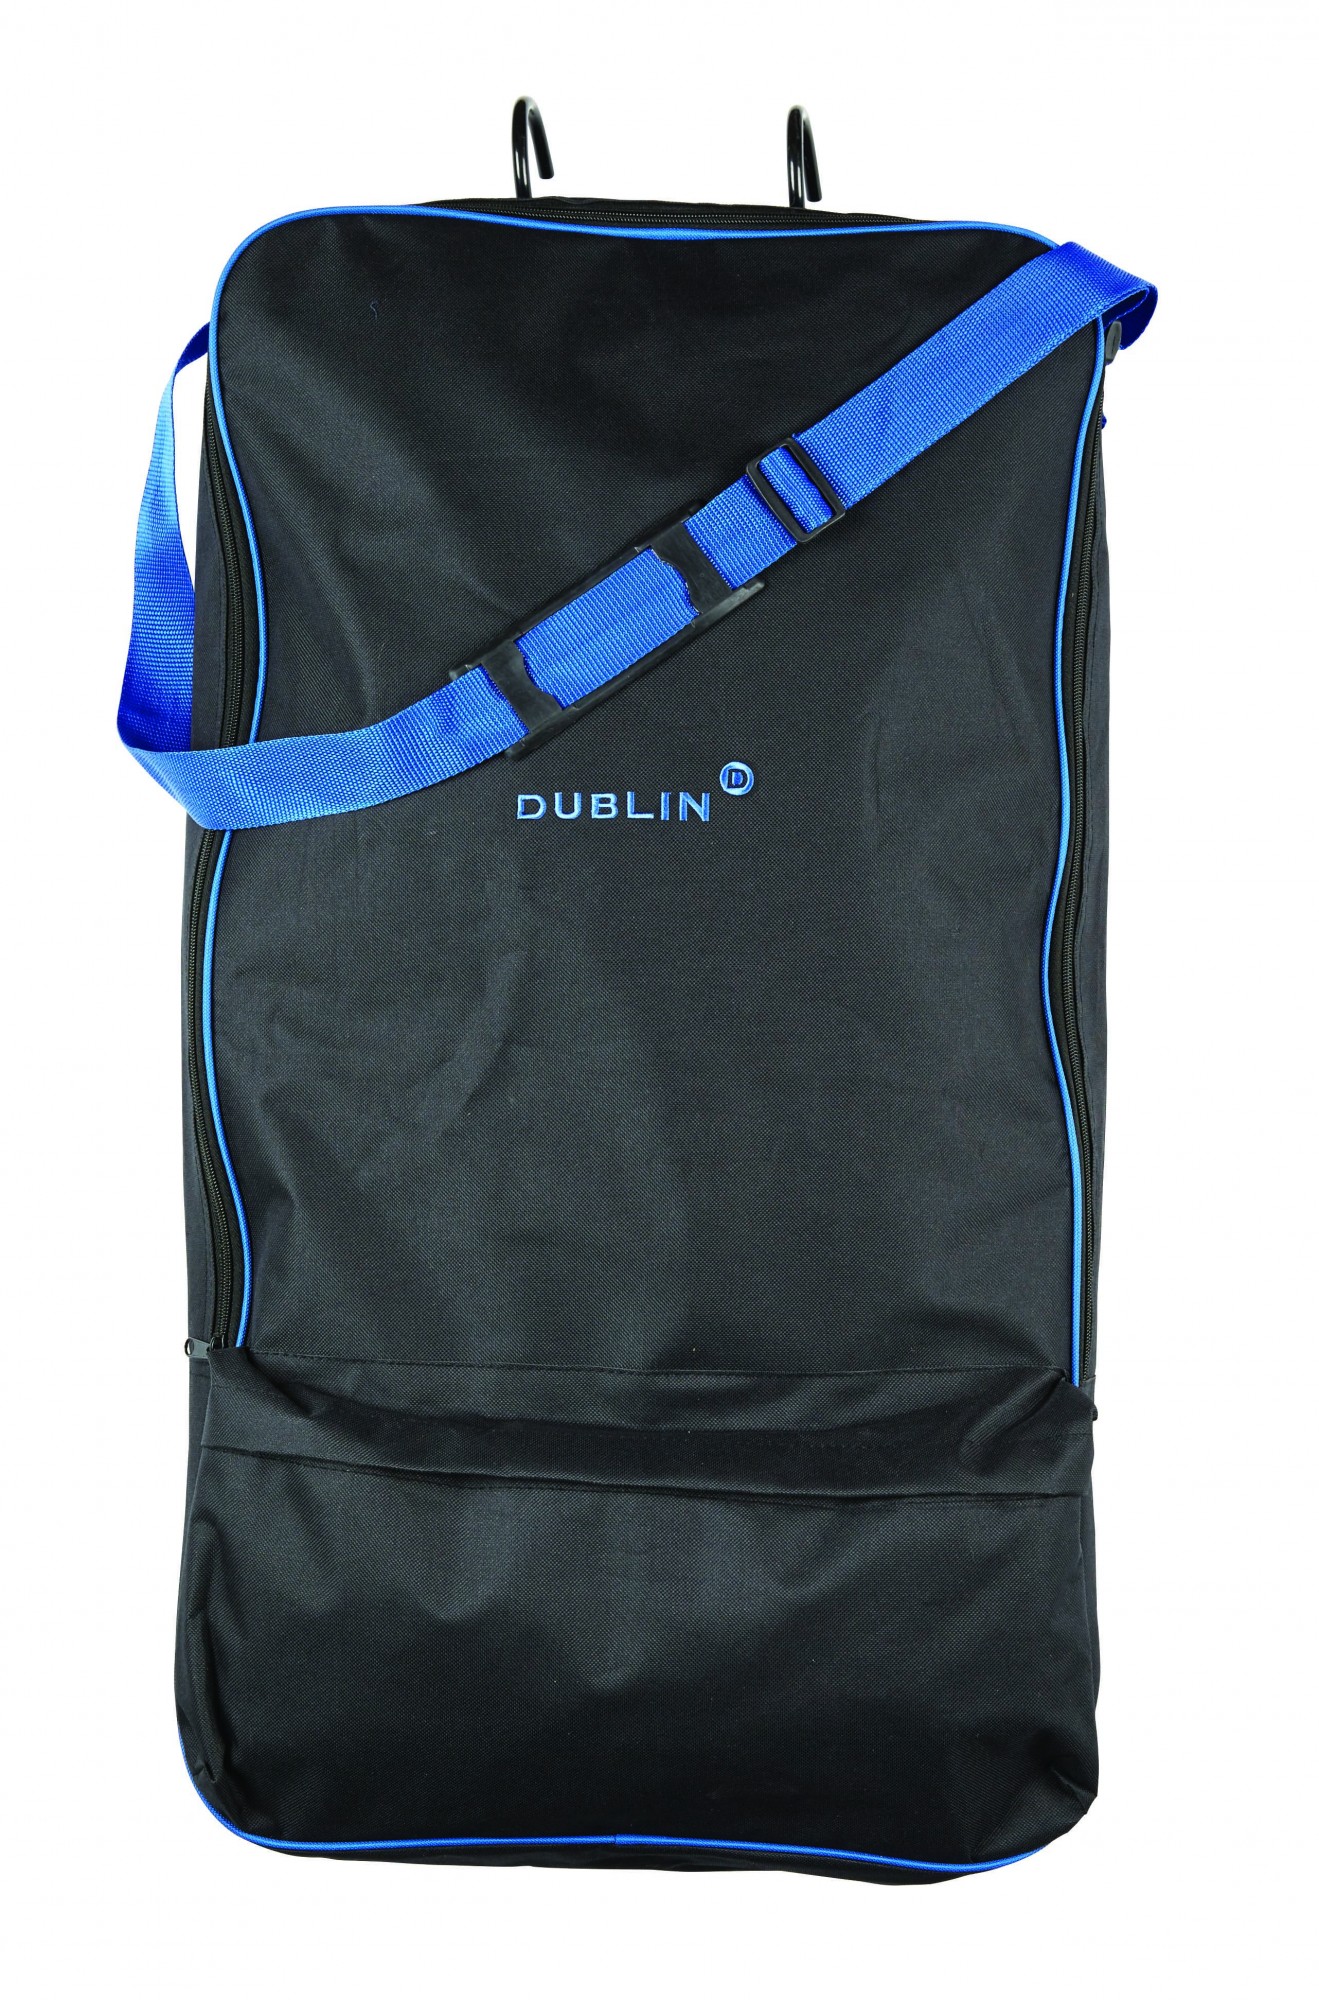 Dublin Imperial Bridle Hook Bag - Inch's